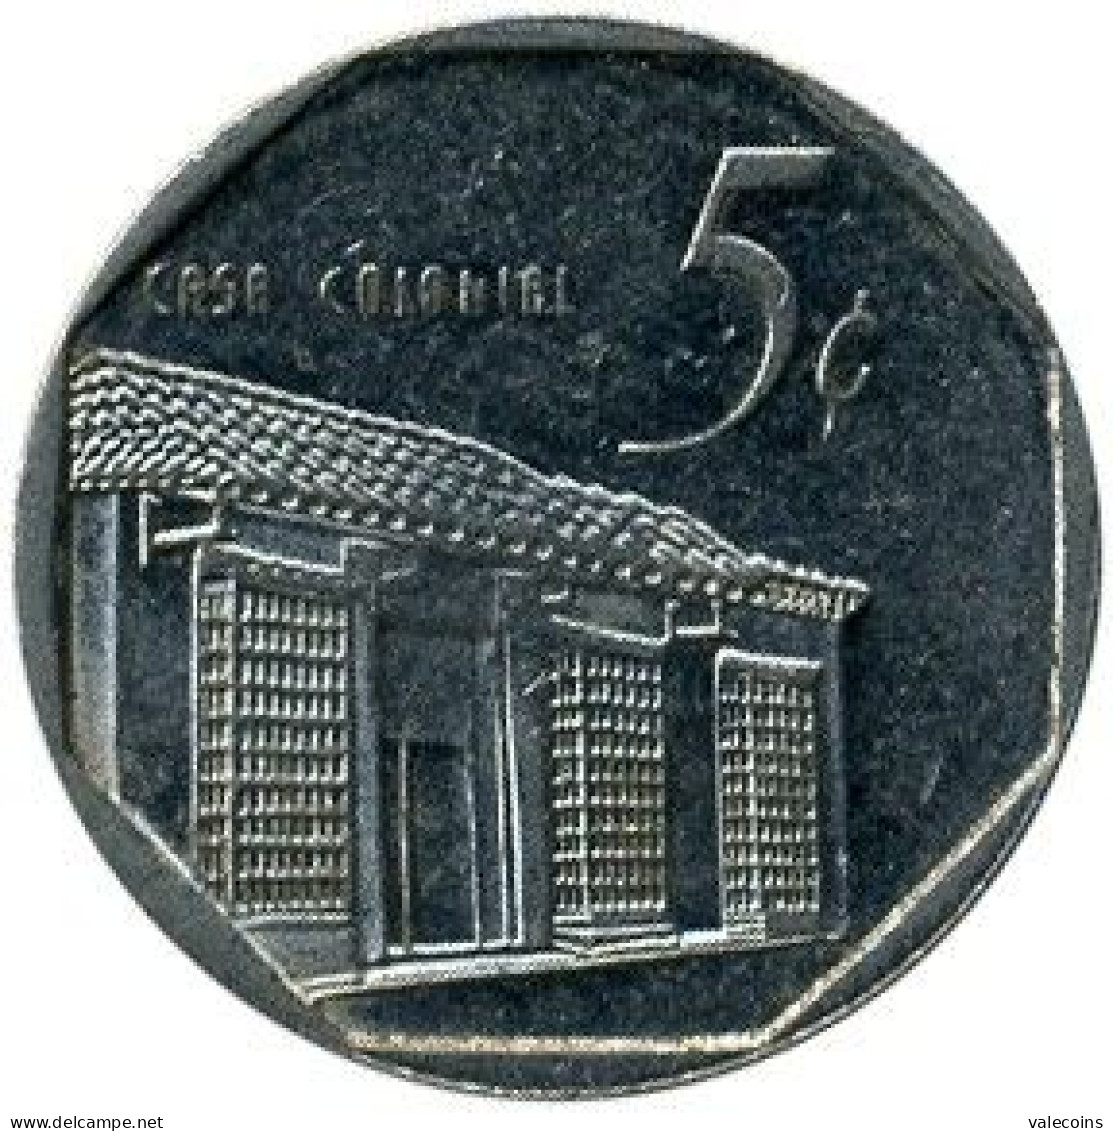 CUBA - 1998 - 5 Centavos - KM 575.2 - CASA COLONIAL - UNC - Cuba